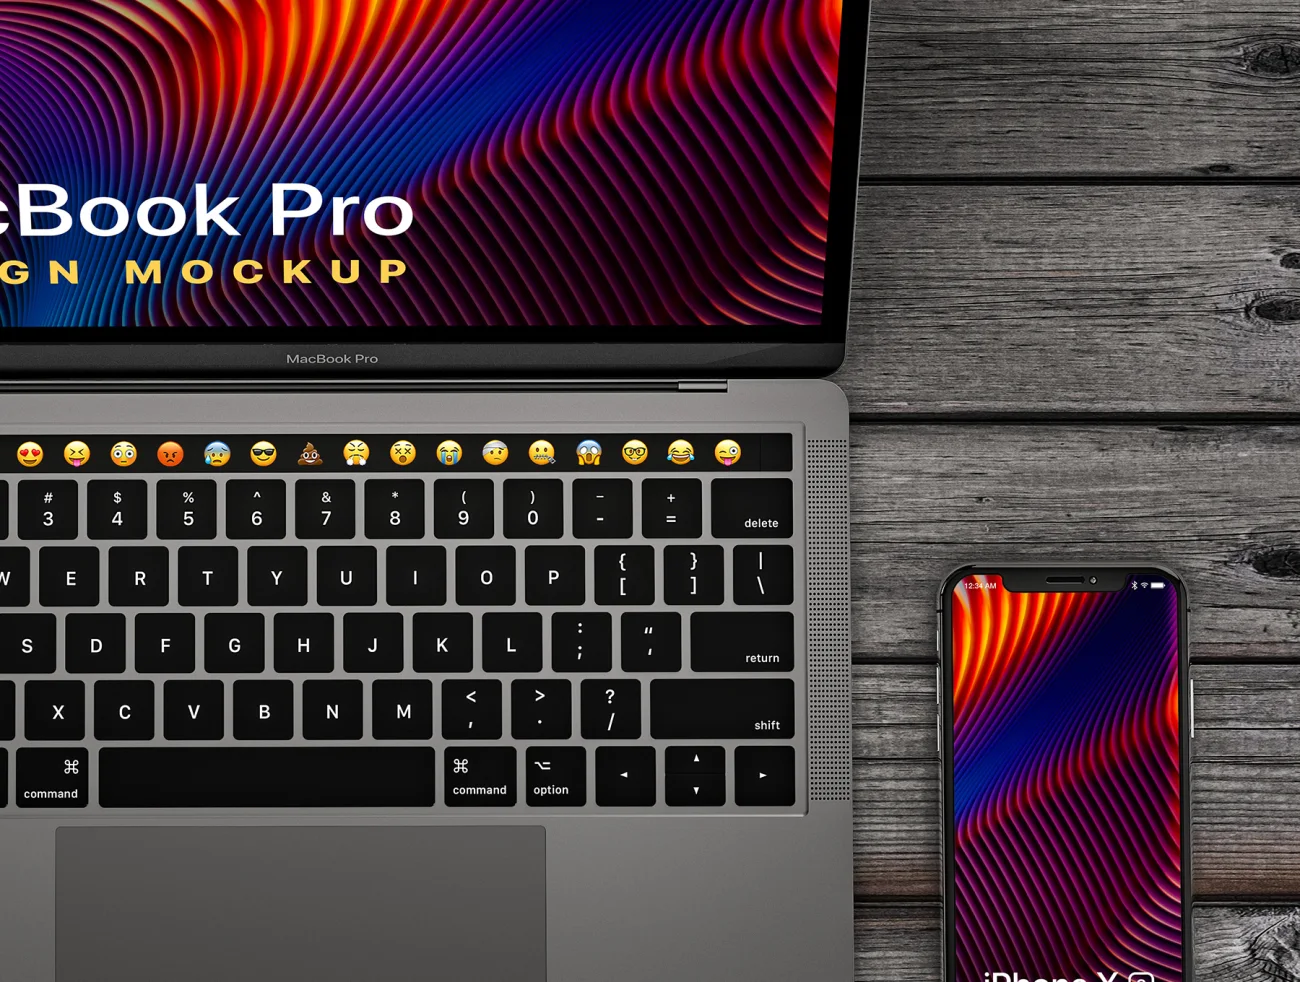 MacBook Pro & iPhone XS Design Mockup(02) MacBook Pro和iPhone XS设计样机-02-产品展示、优雅样机、创意展示、办公样机、实景样机、手机模型、样机、苹果设备-到位啦UI